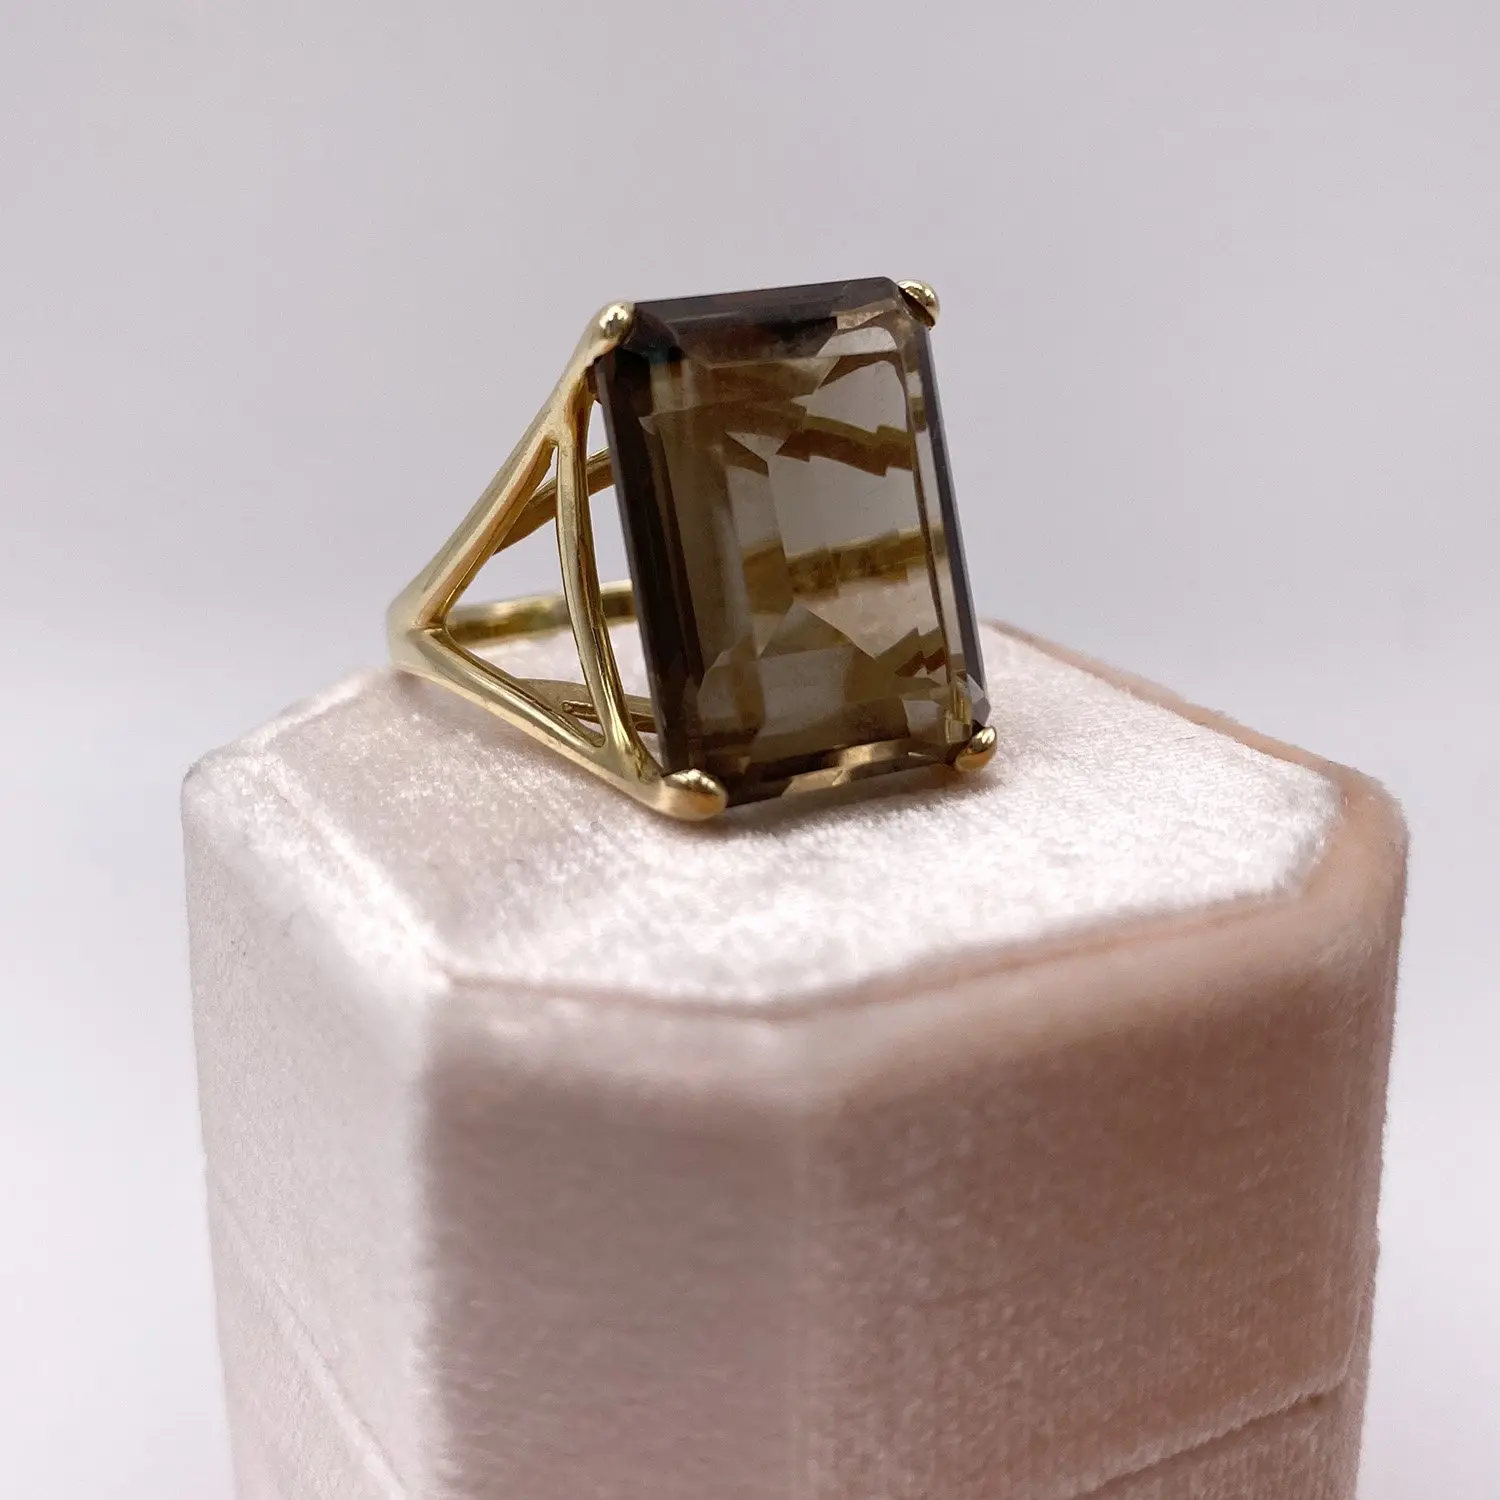 smoked quartz ring - Is smoky quartz a real stone